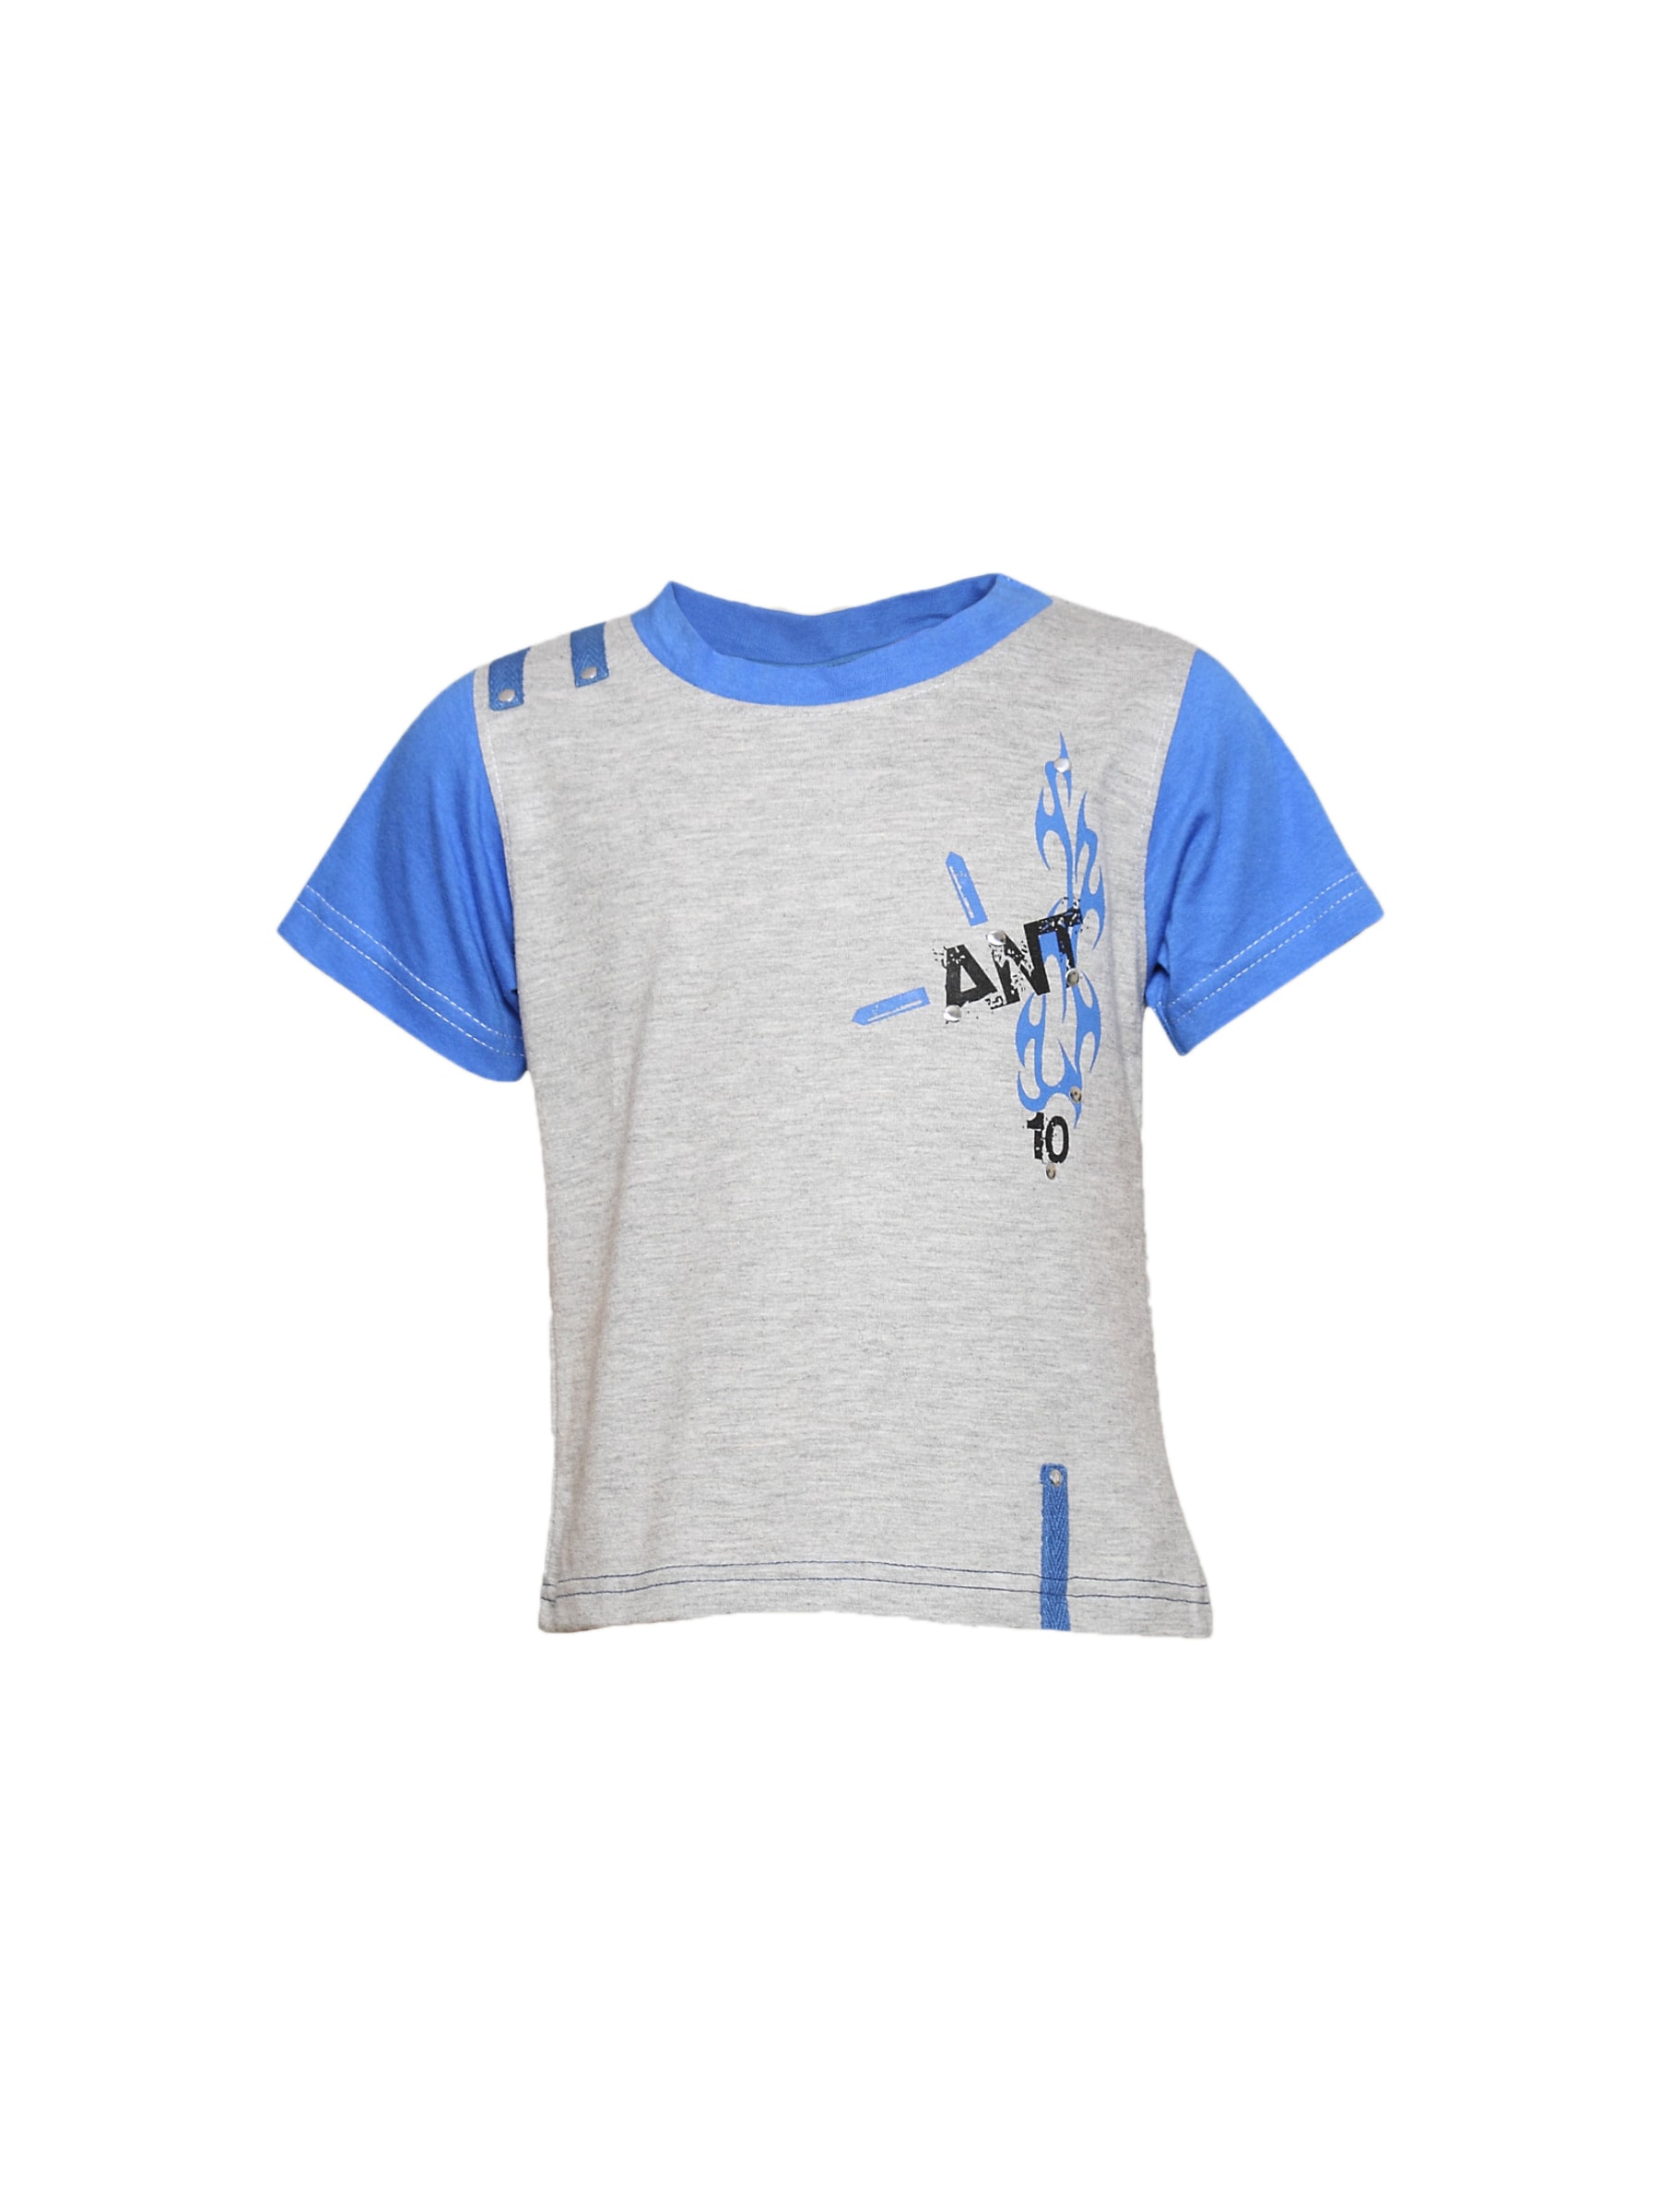 Ant Kids Boy's Blue Grey Kidswear